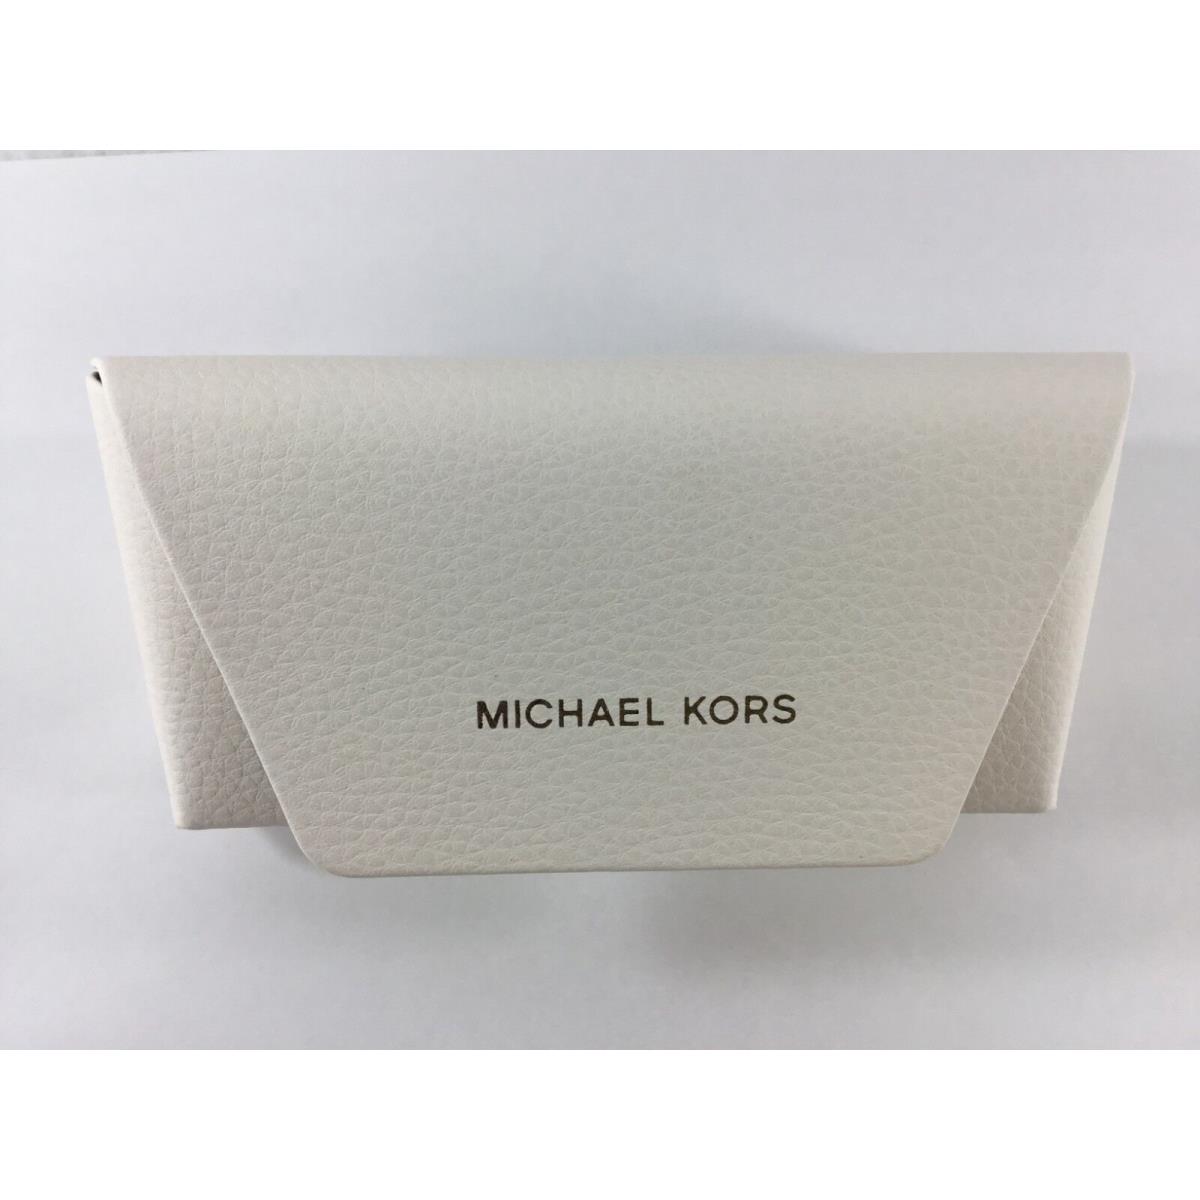 Michael Kors sunglasses  - Brown , Transparent brown and gold Frame, Brown grey Gradient Lens 4